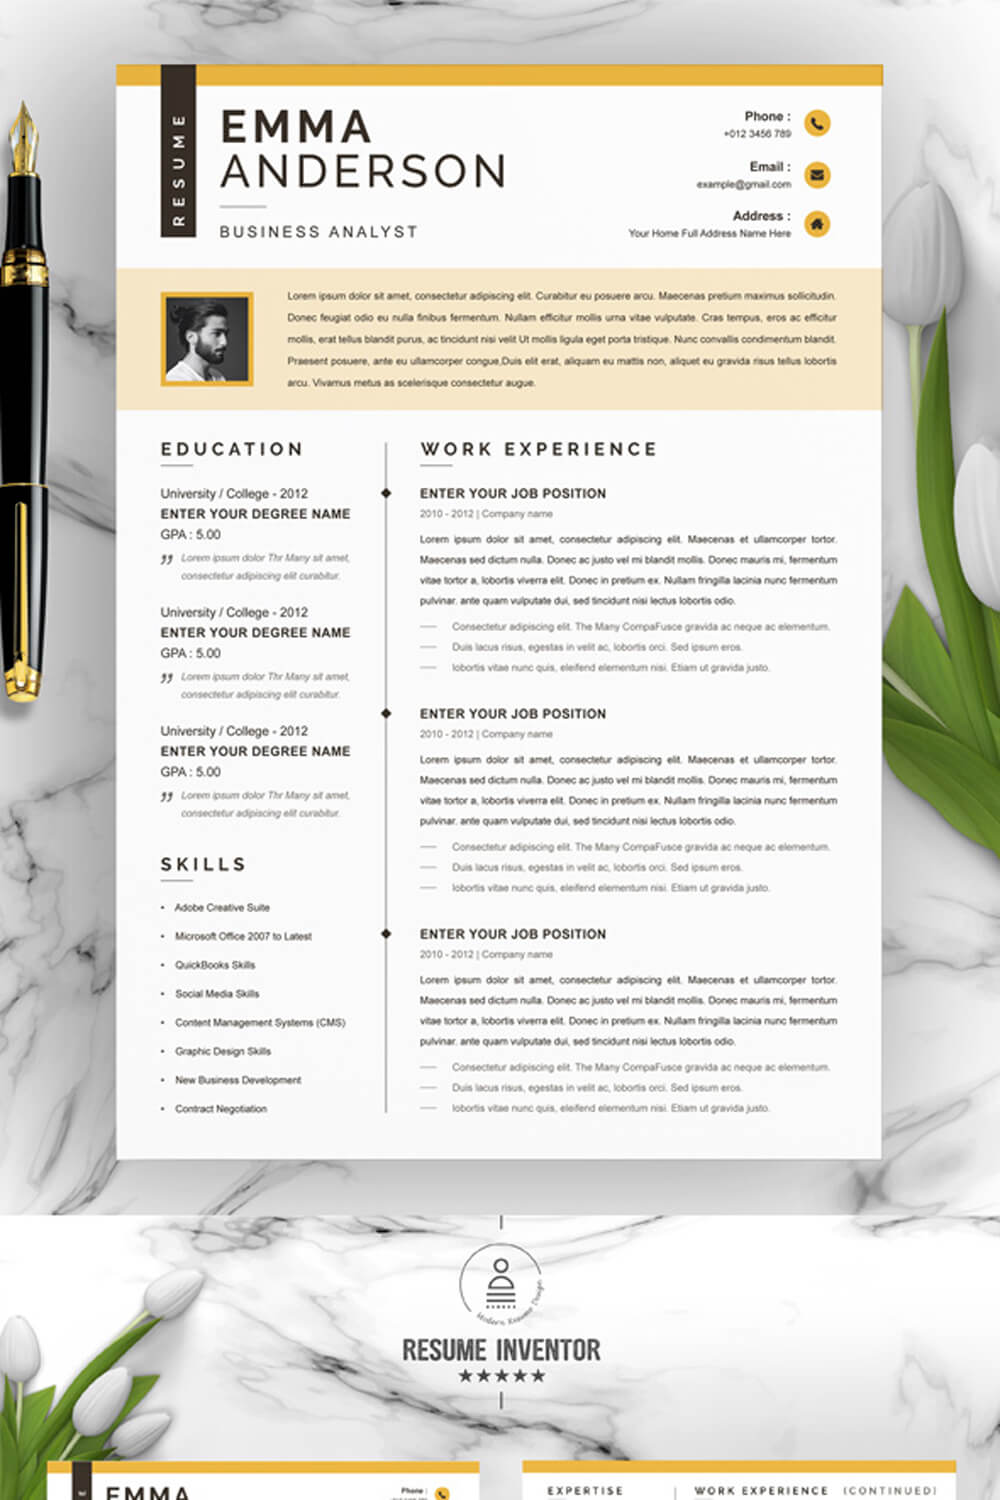 Business Analyst CV Template | Best Designer Resume Template pinterest preview image.